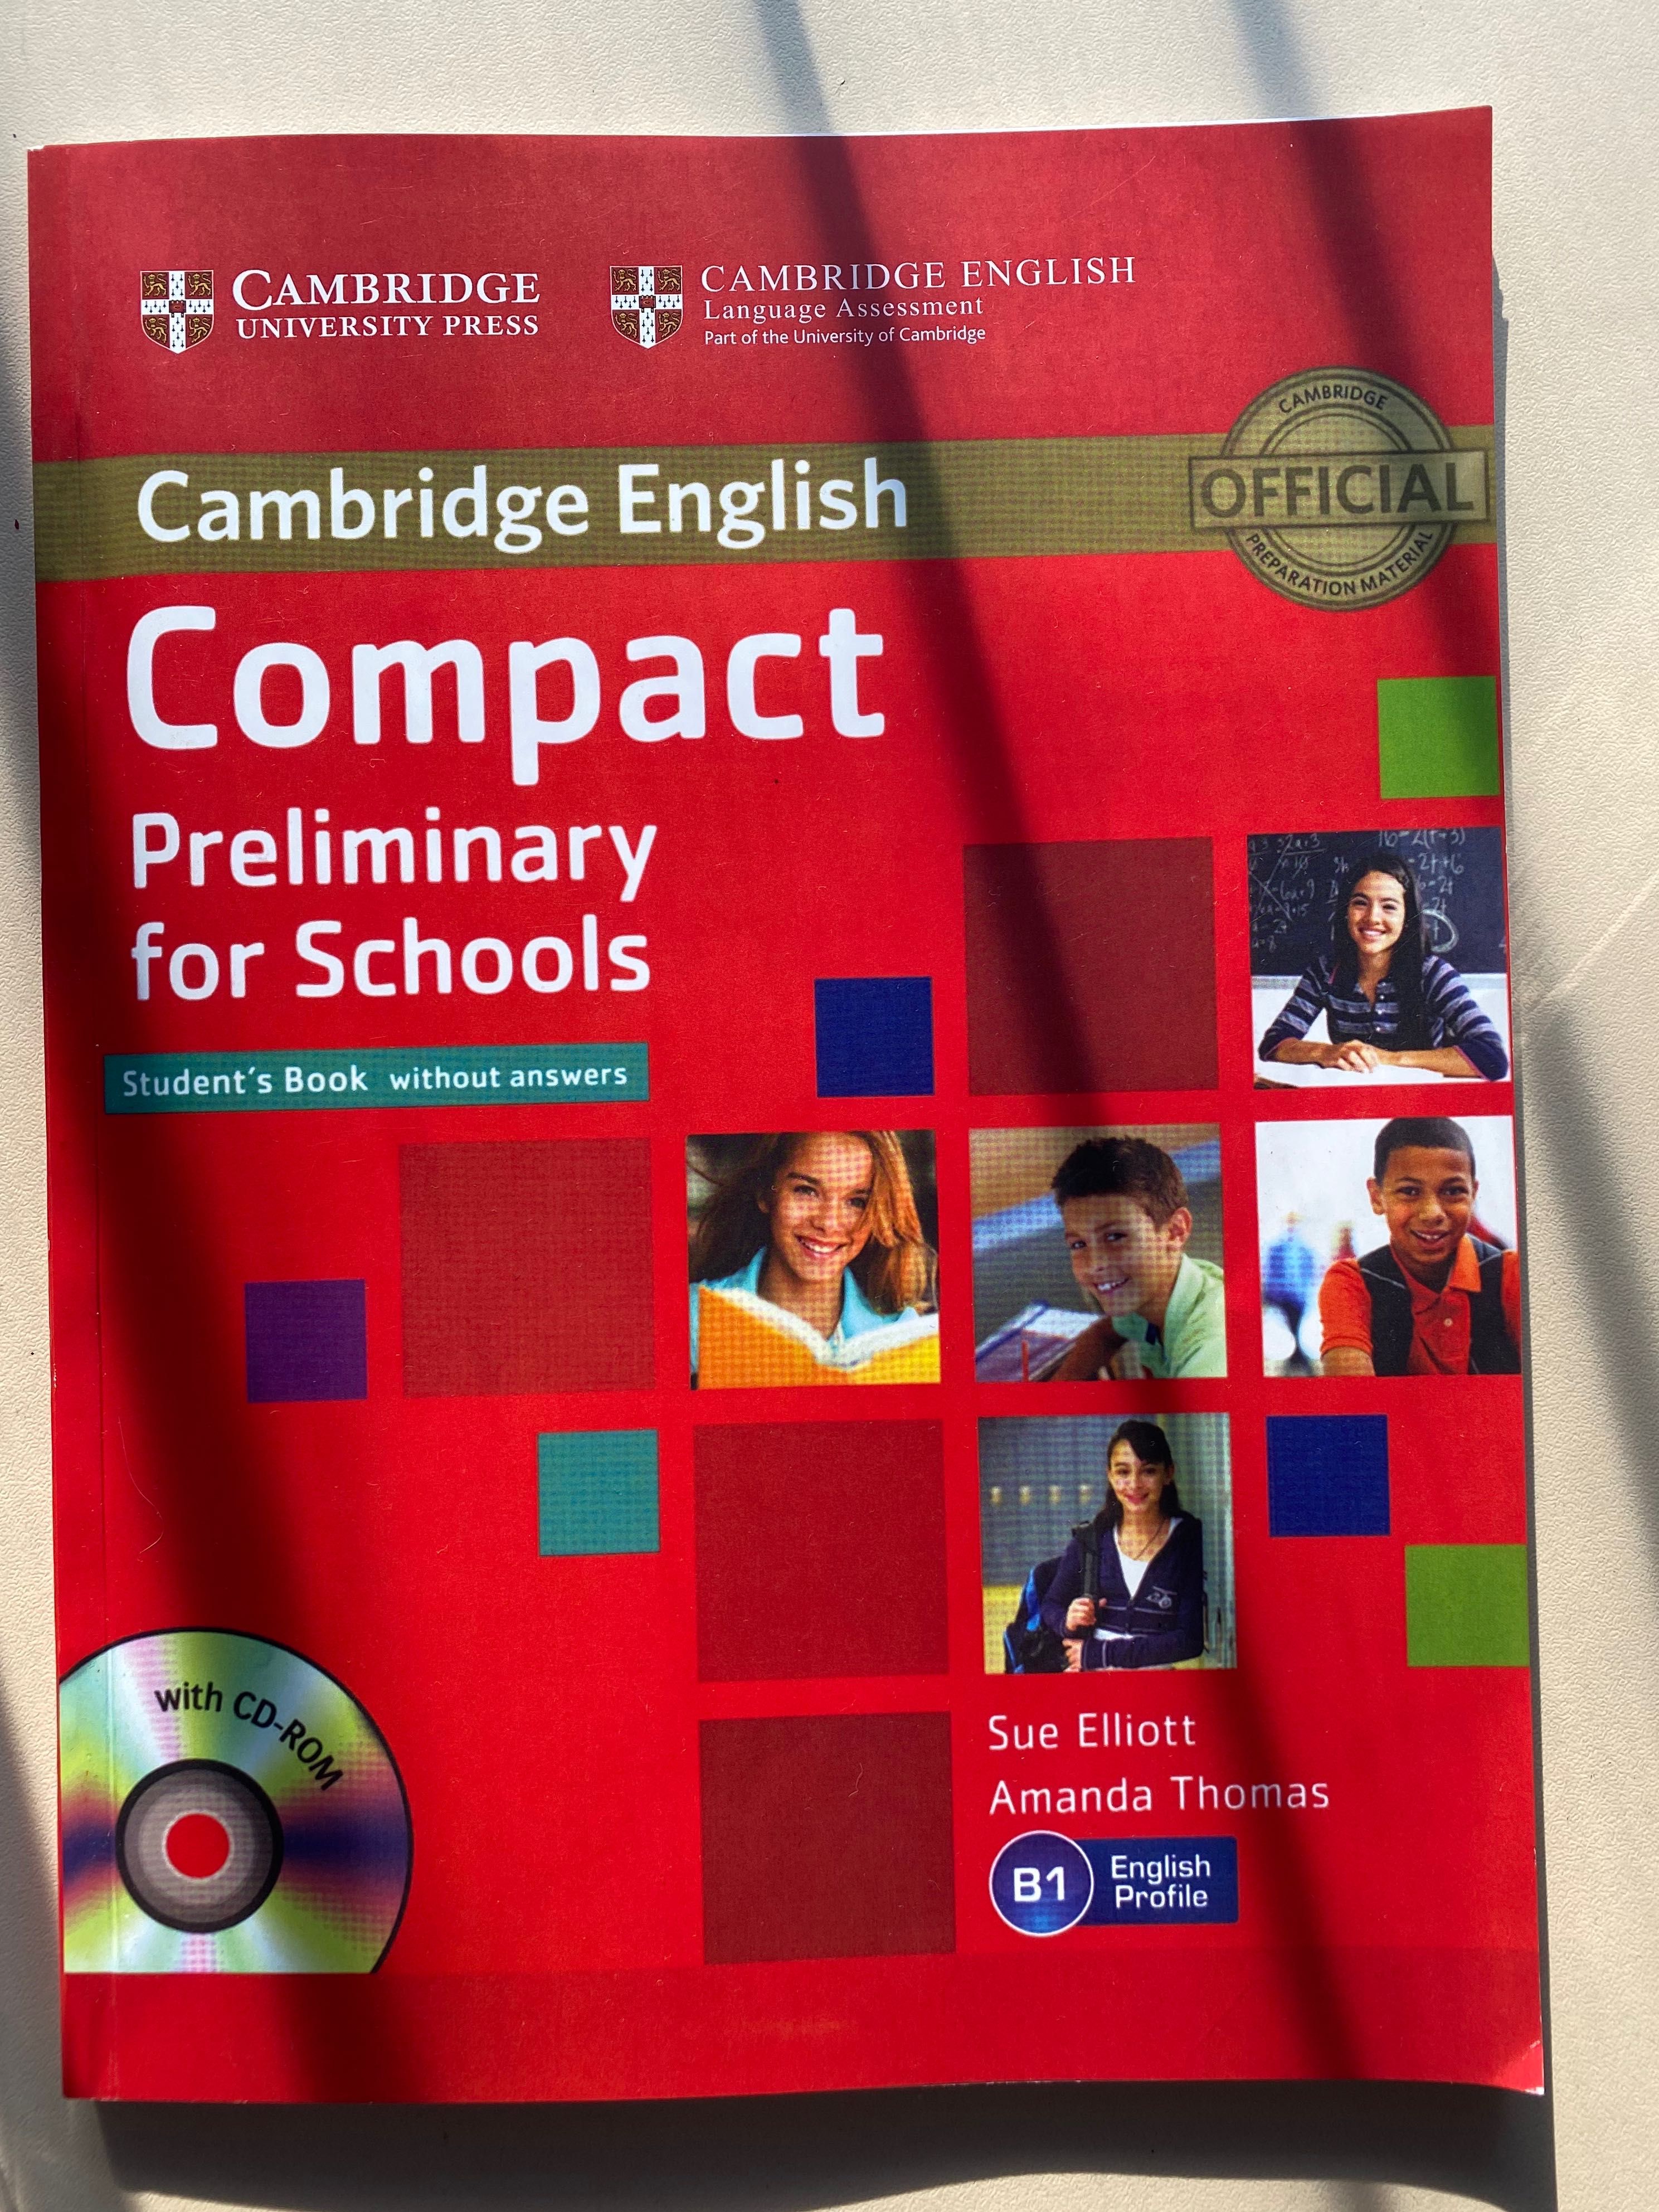 Cambridge English Compact Preliminary for Schools Student's Book